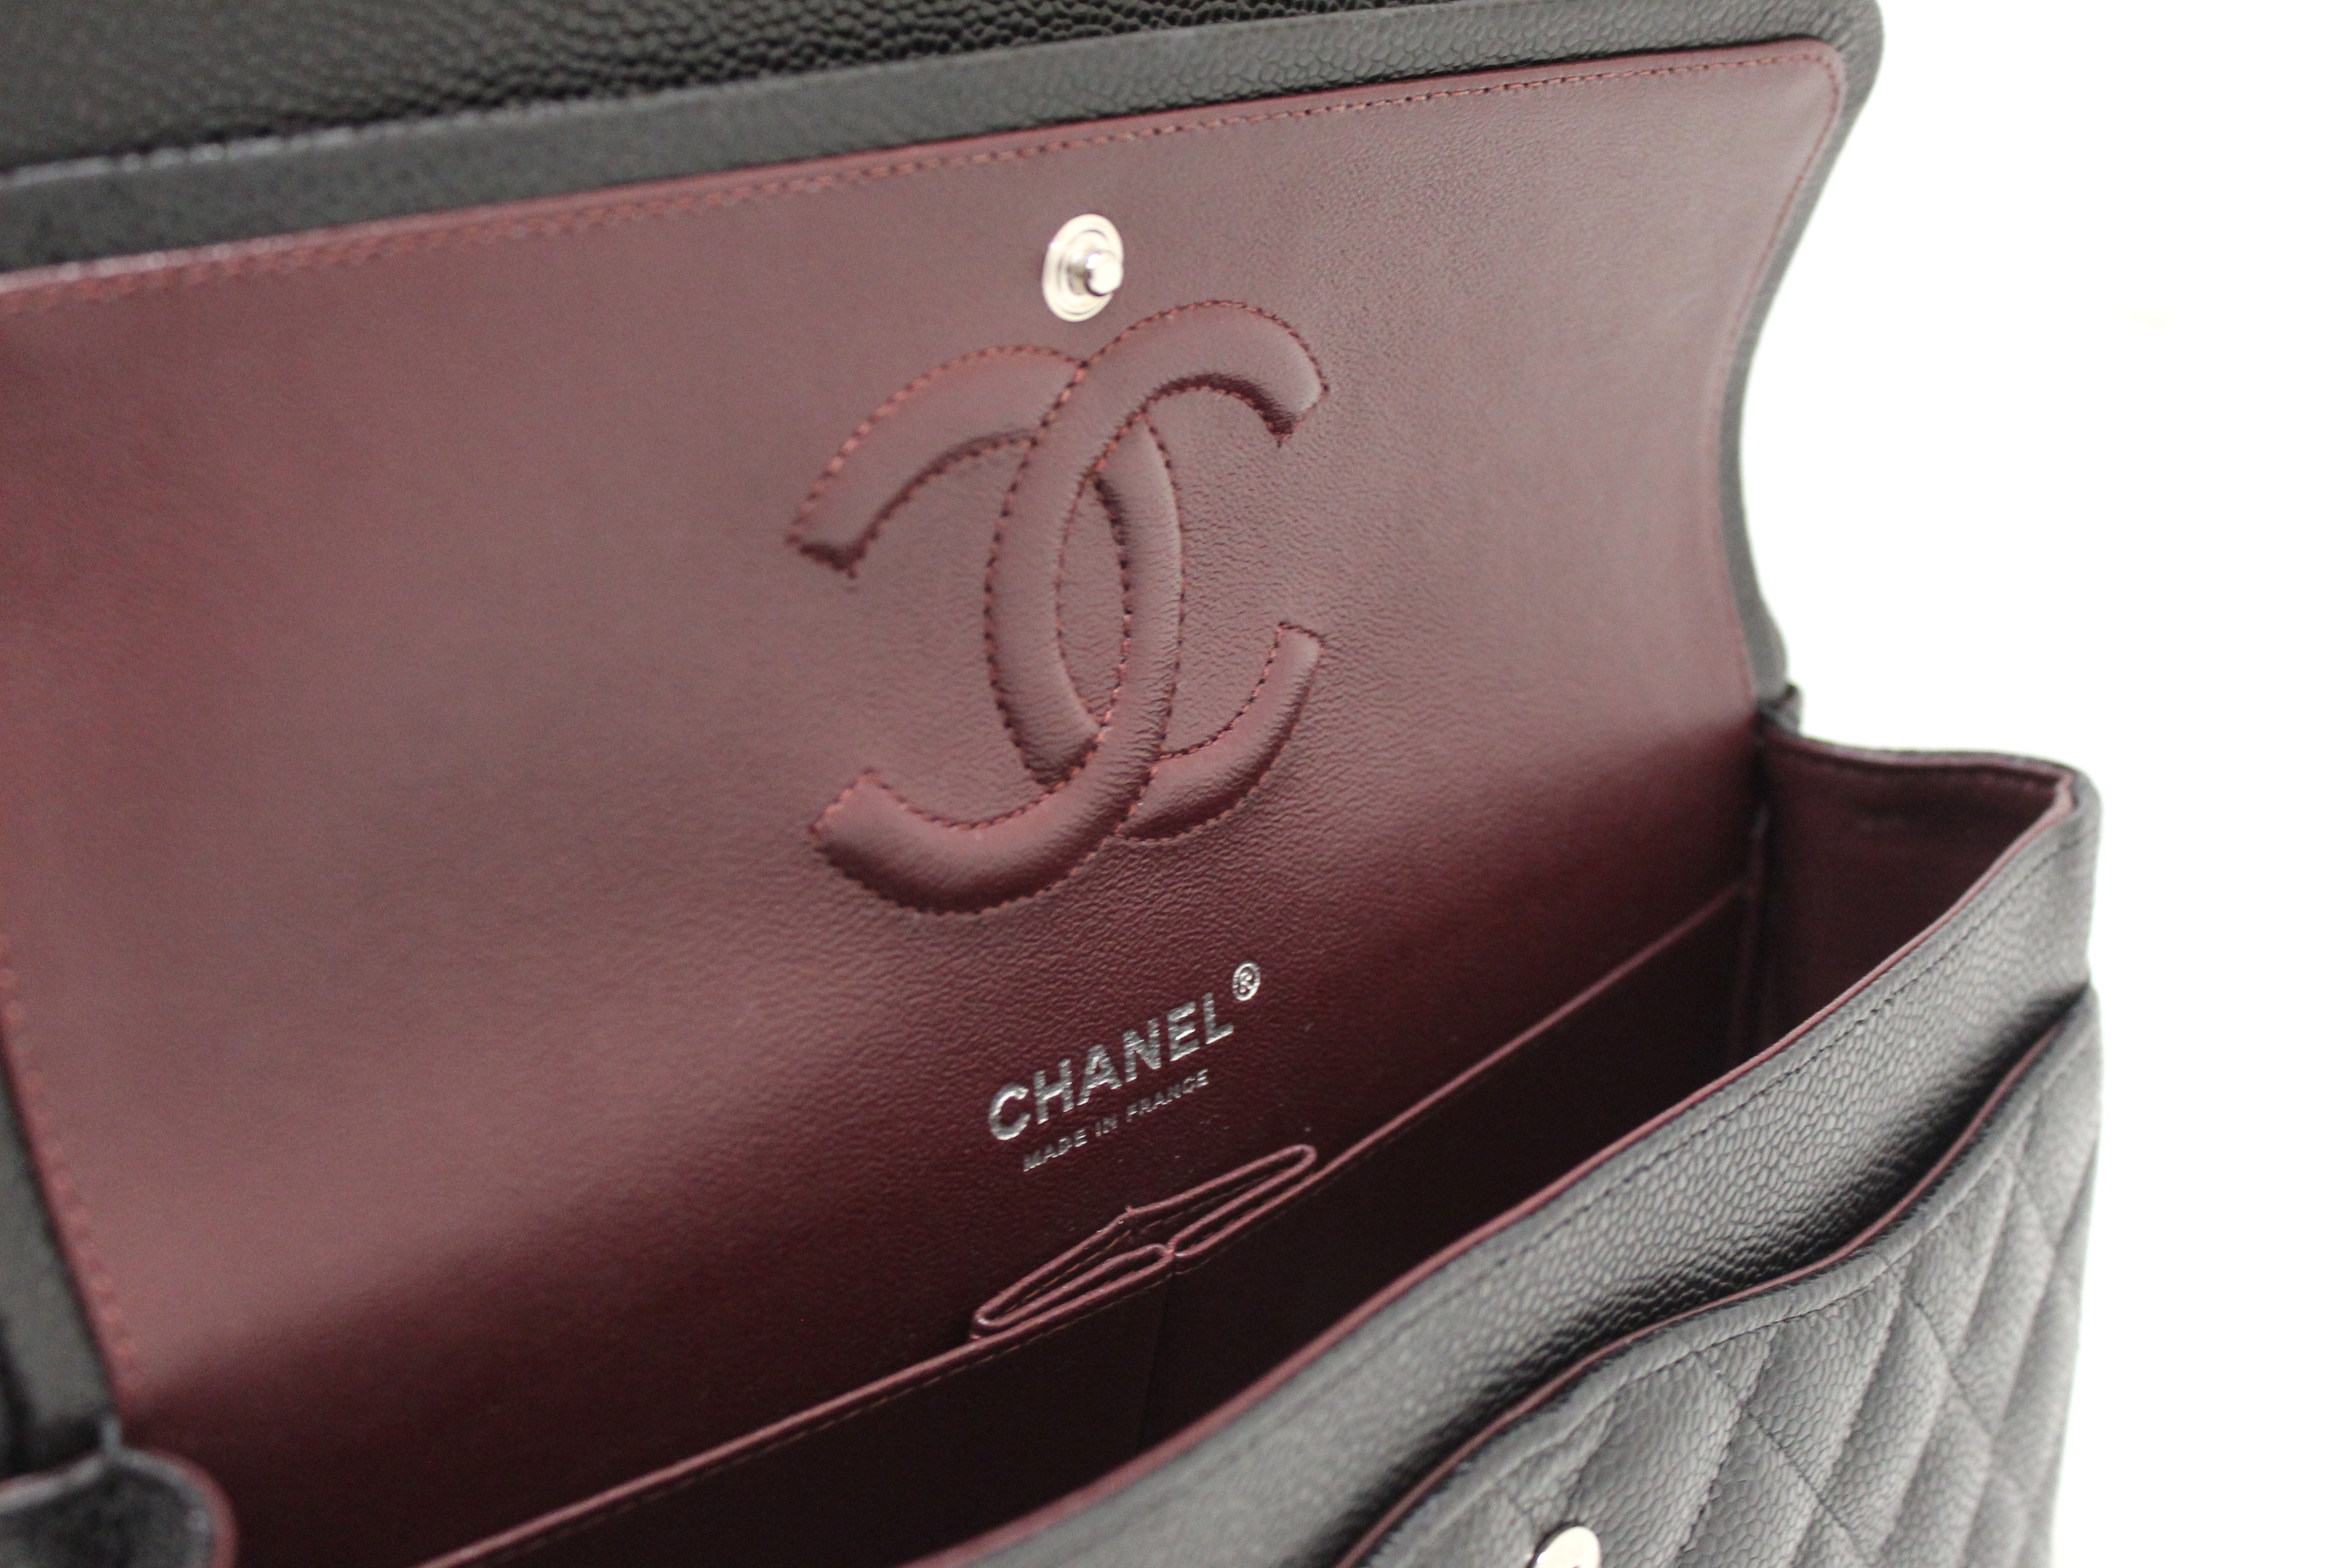 Authentic Chanel Classic Medium Light Pink Caviar Double Flap SHW